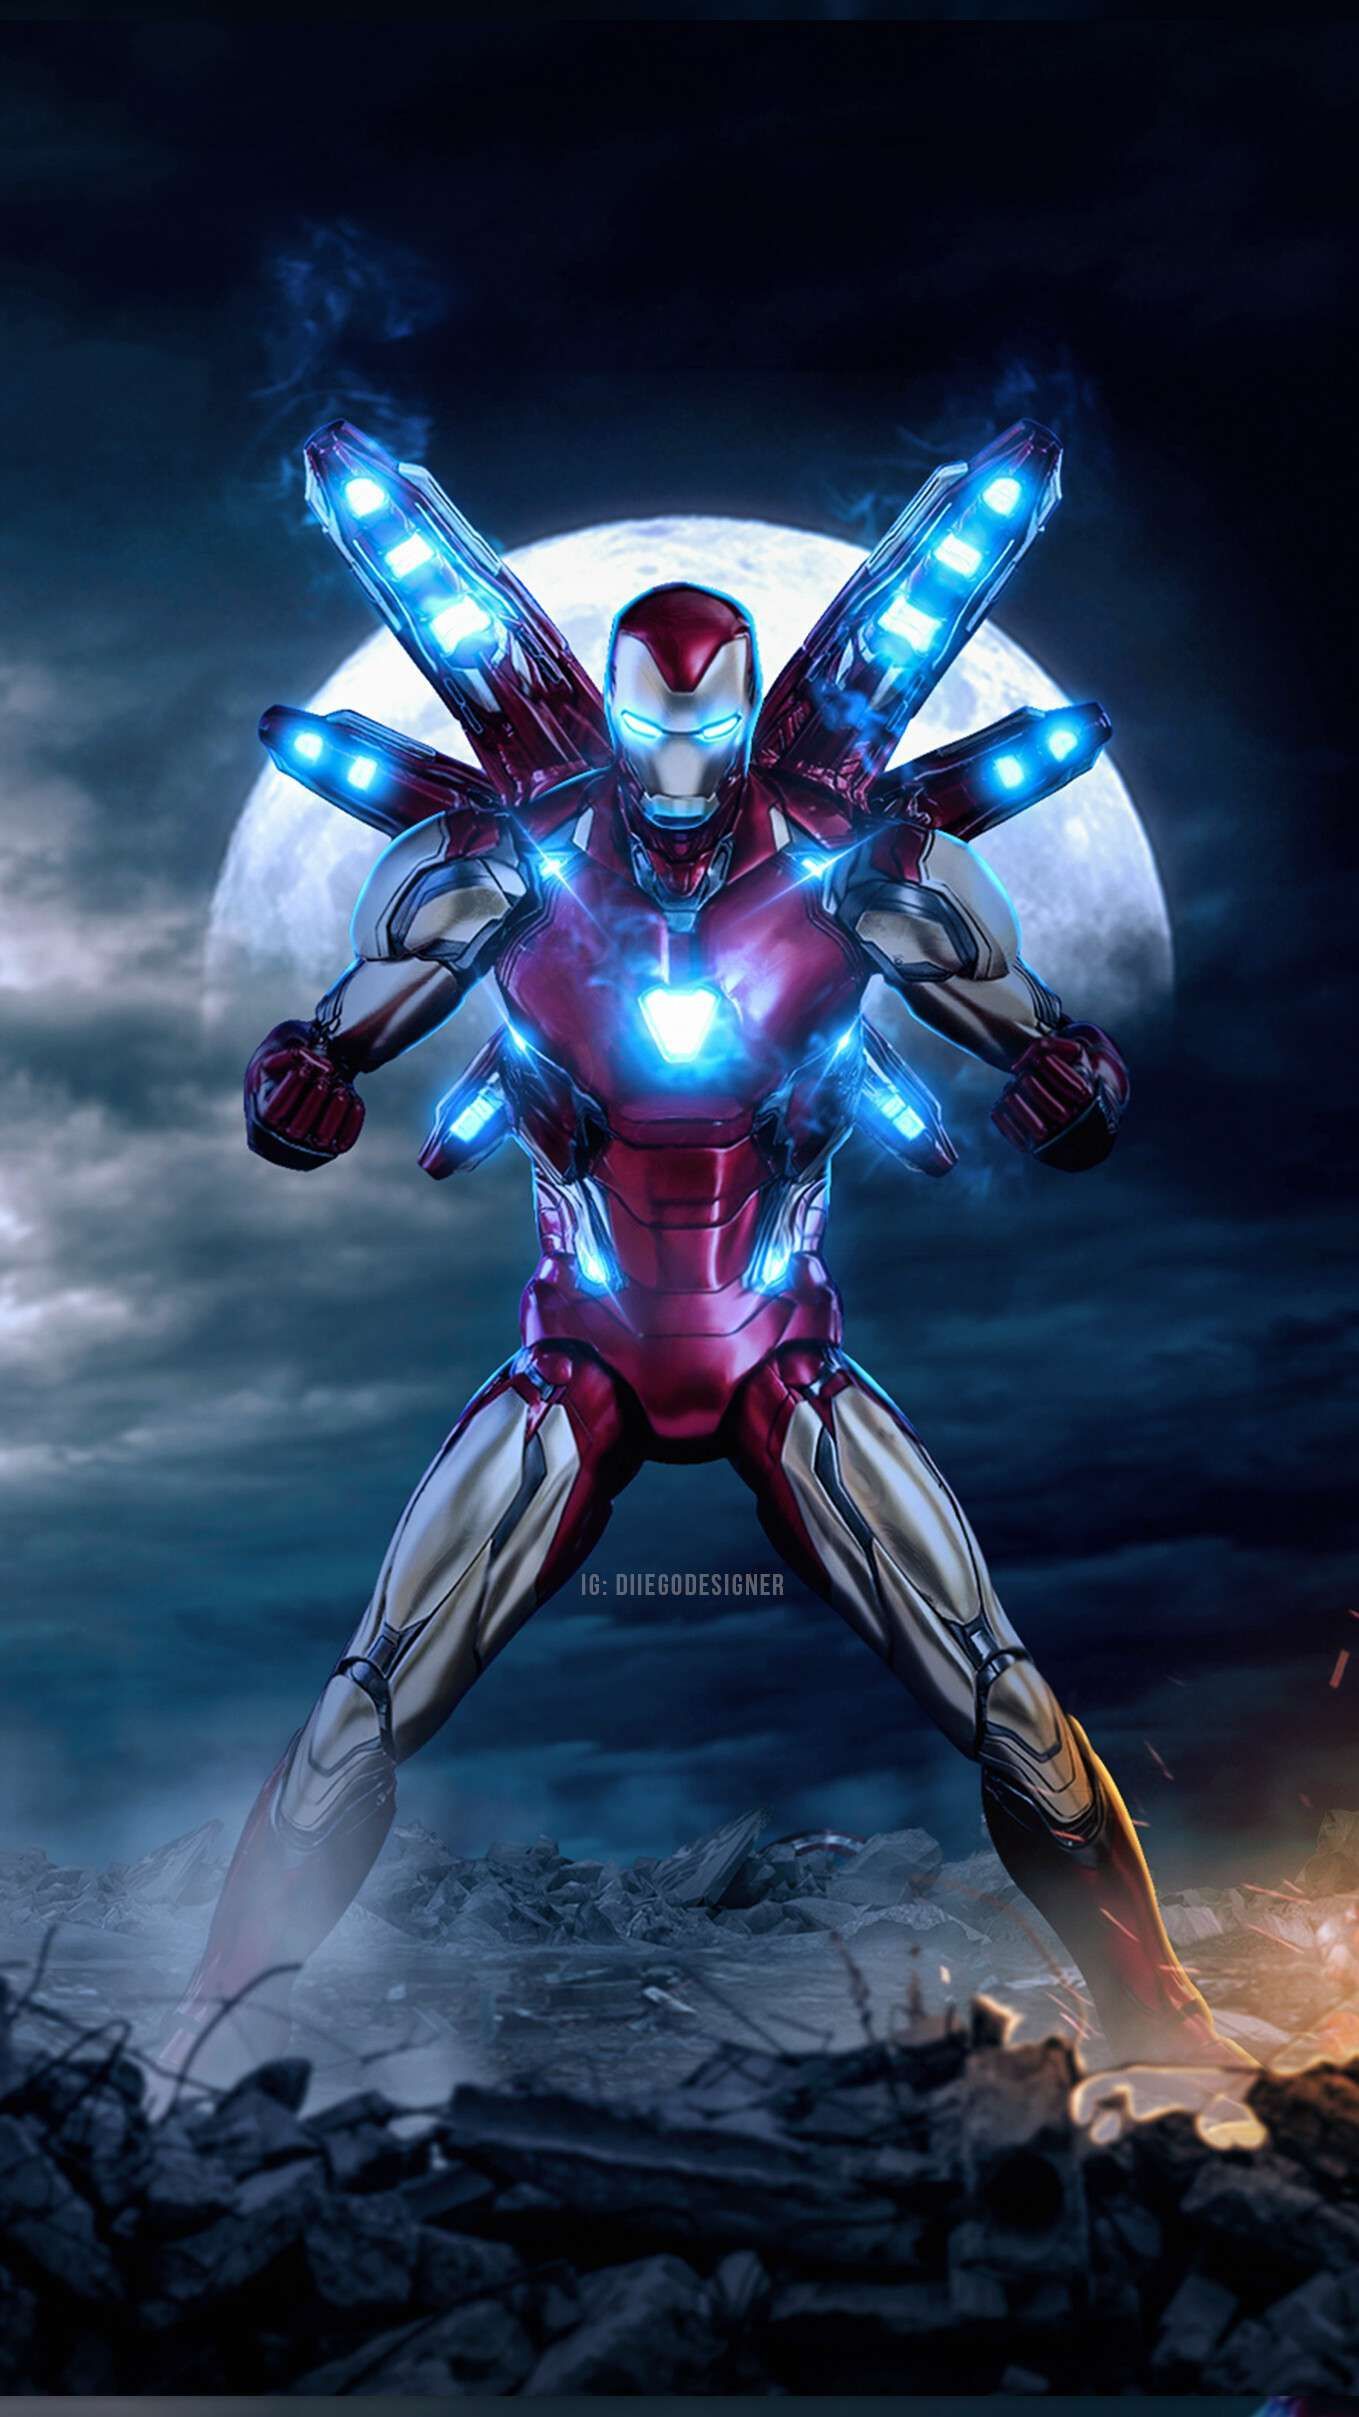 Best Iron man suit image. Iron man, Iron man suit